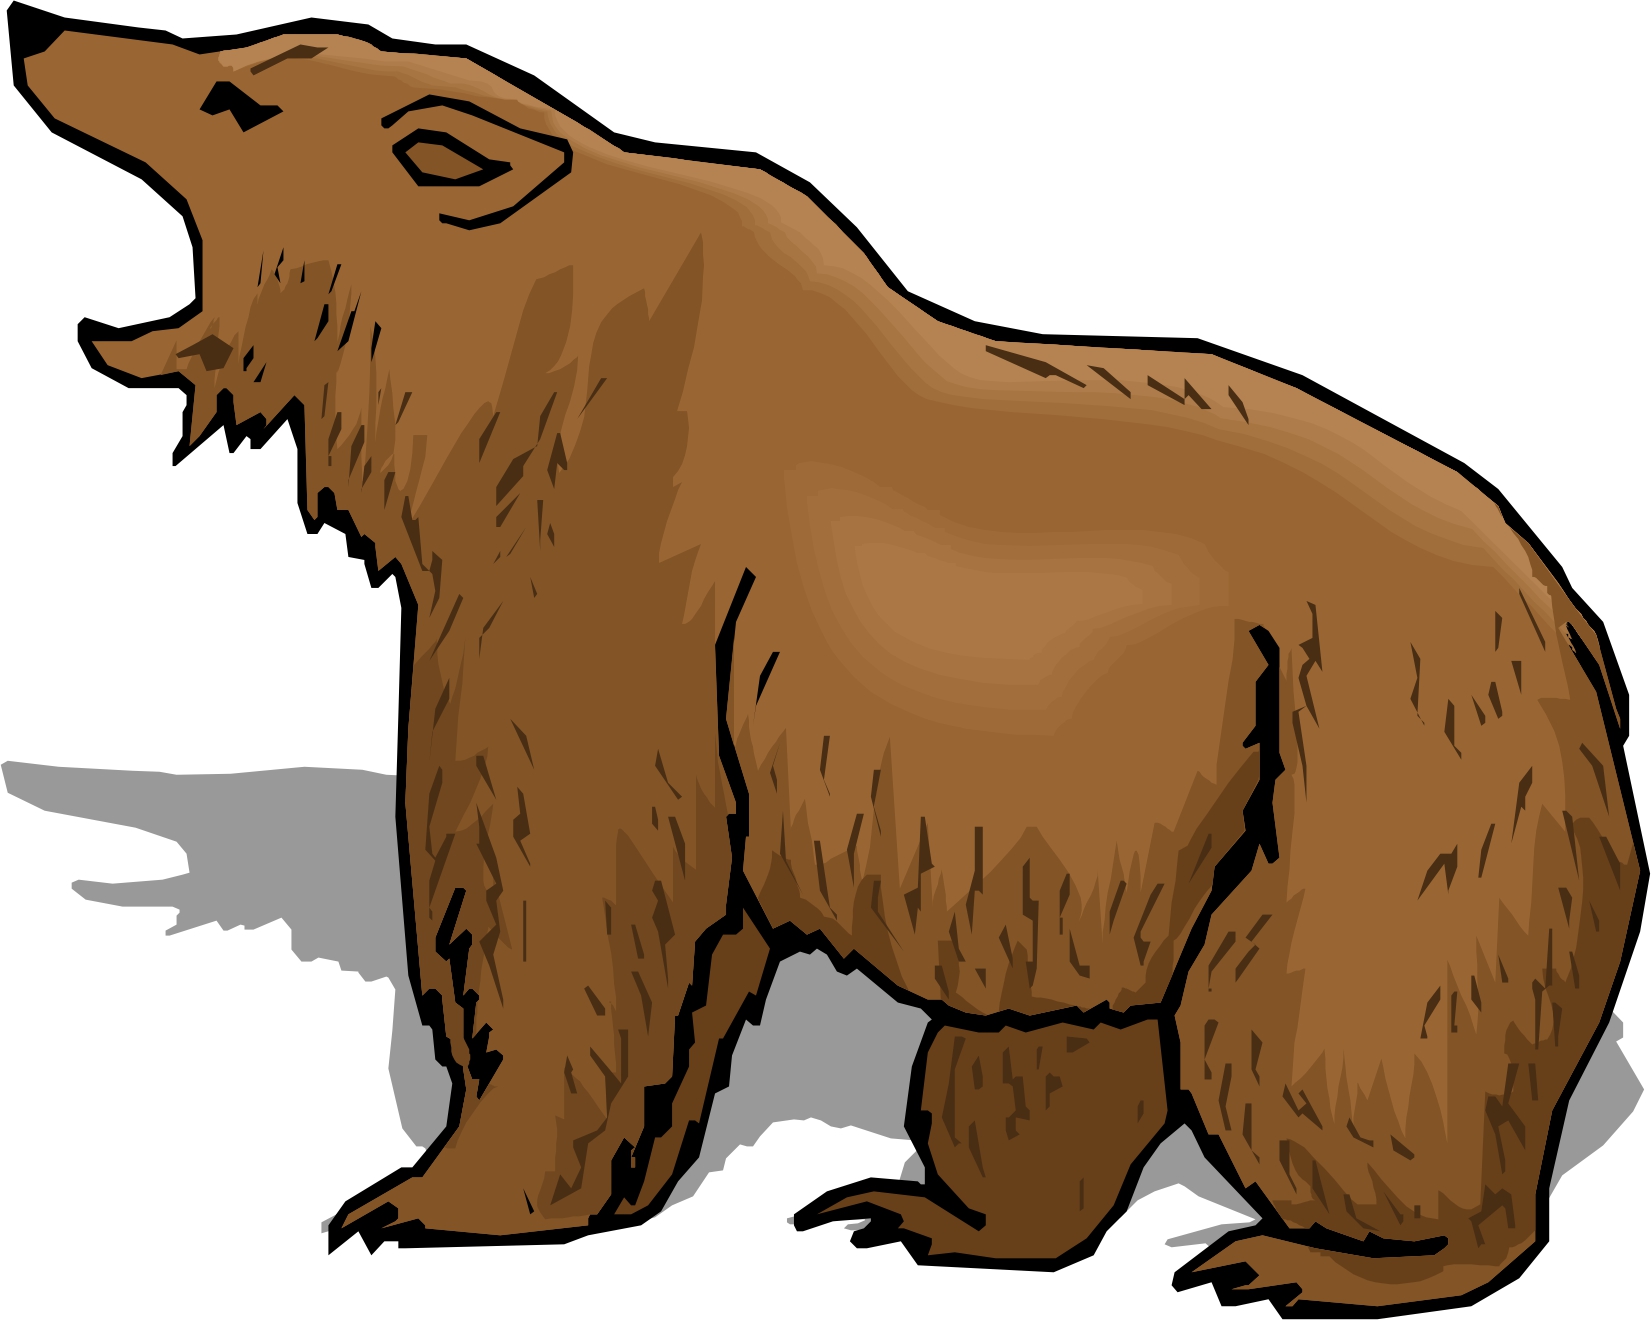 3. "Cartoon bear with blonde hair" illustration - wide 7